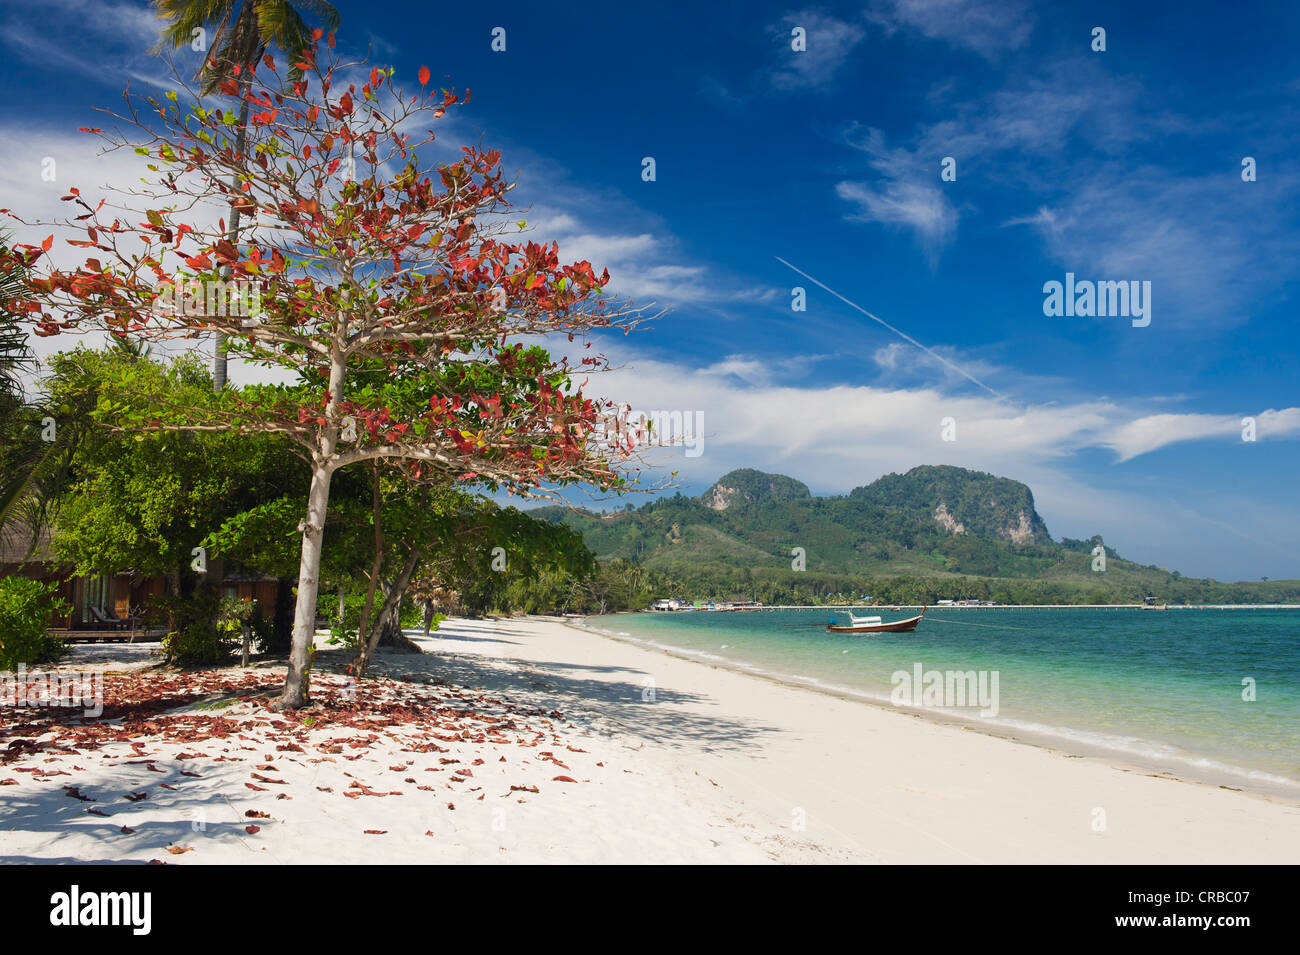 Red leaved tree on the sandy beach, Ko Muk or Ko Mook island, Thailand, Southeast Asia Stock Photo